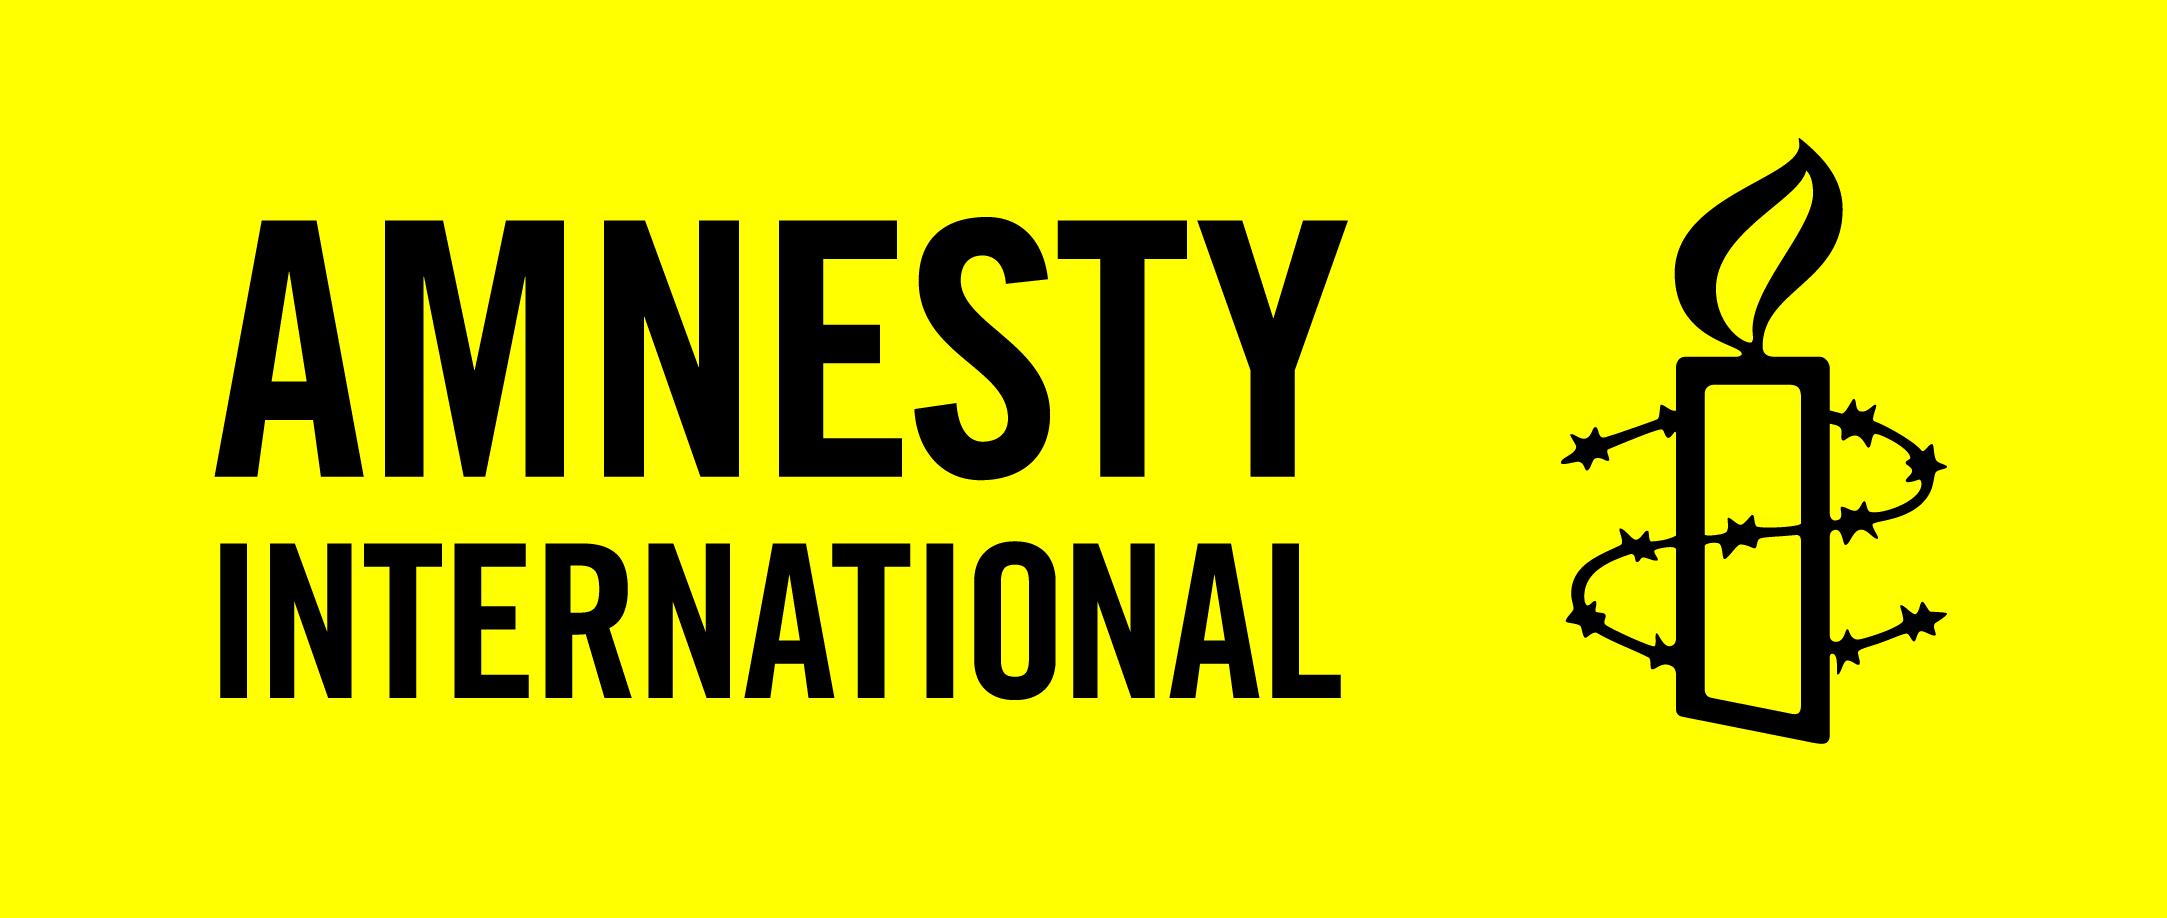 http://amnesty.org/